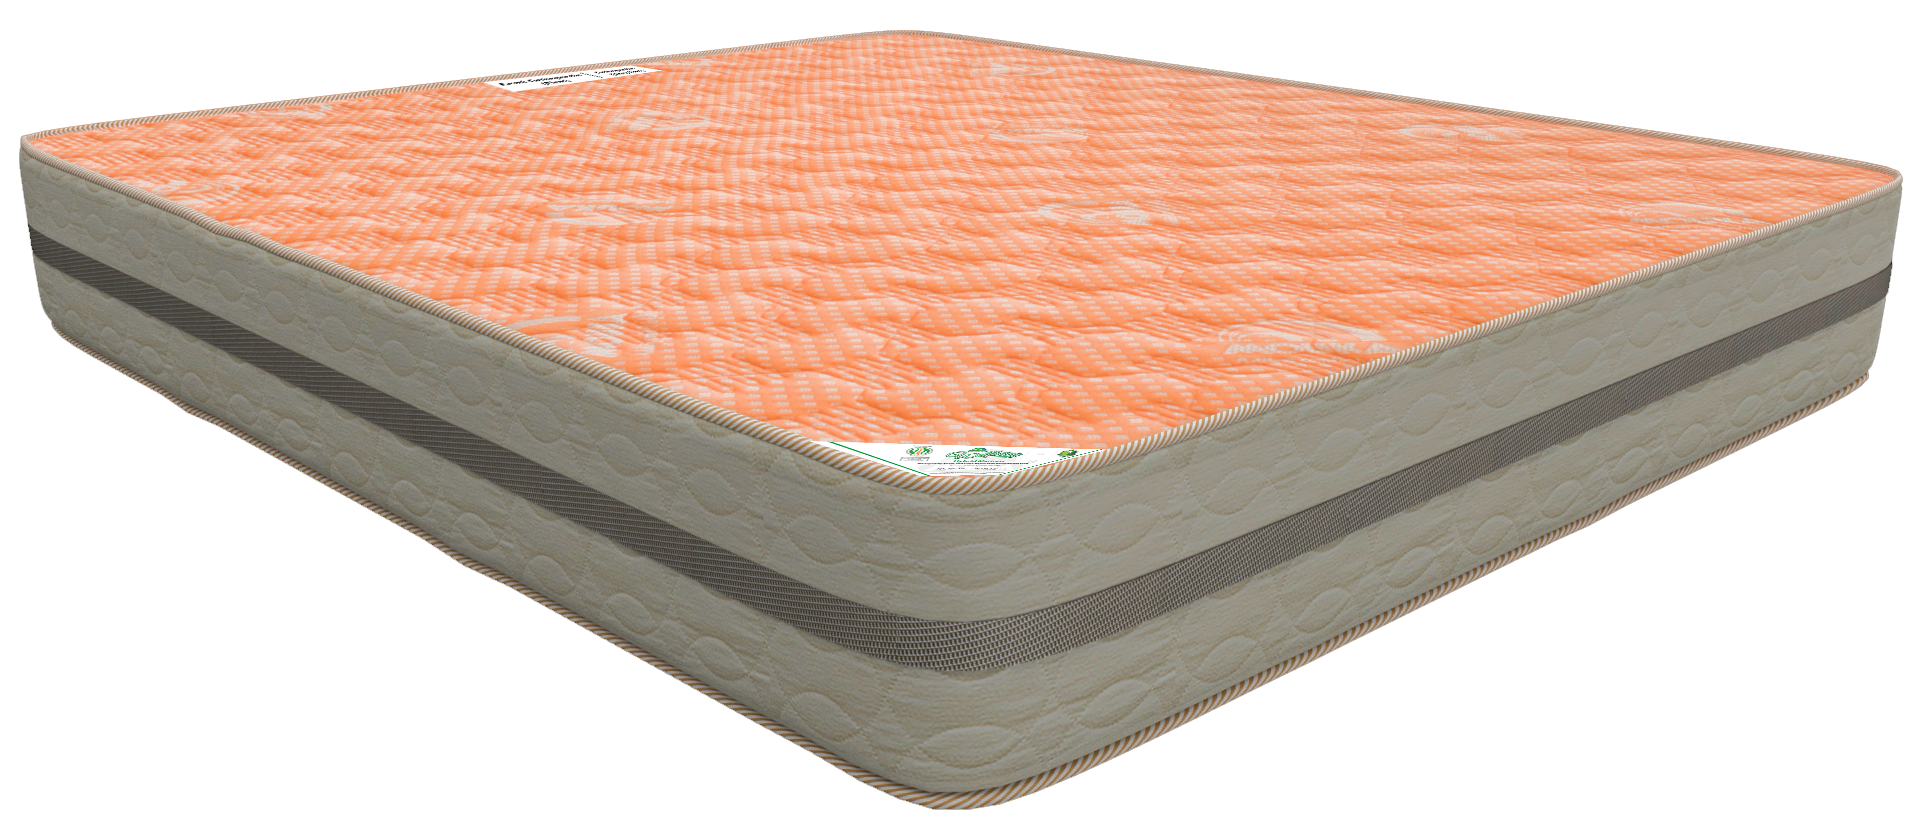 mouka foam mattress price list